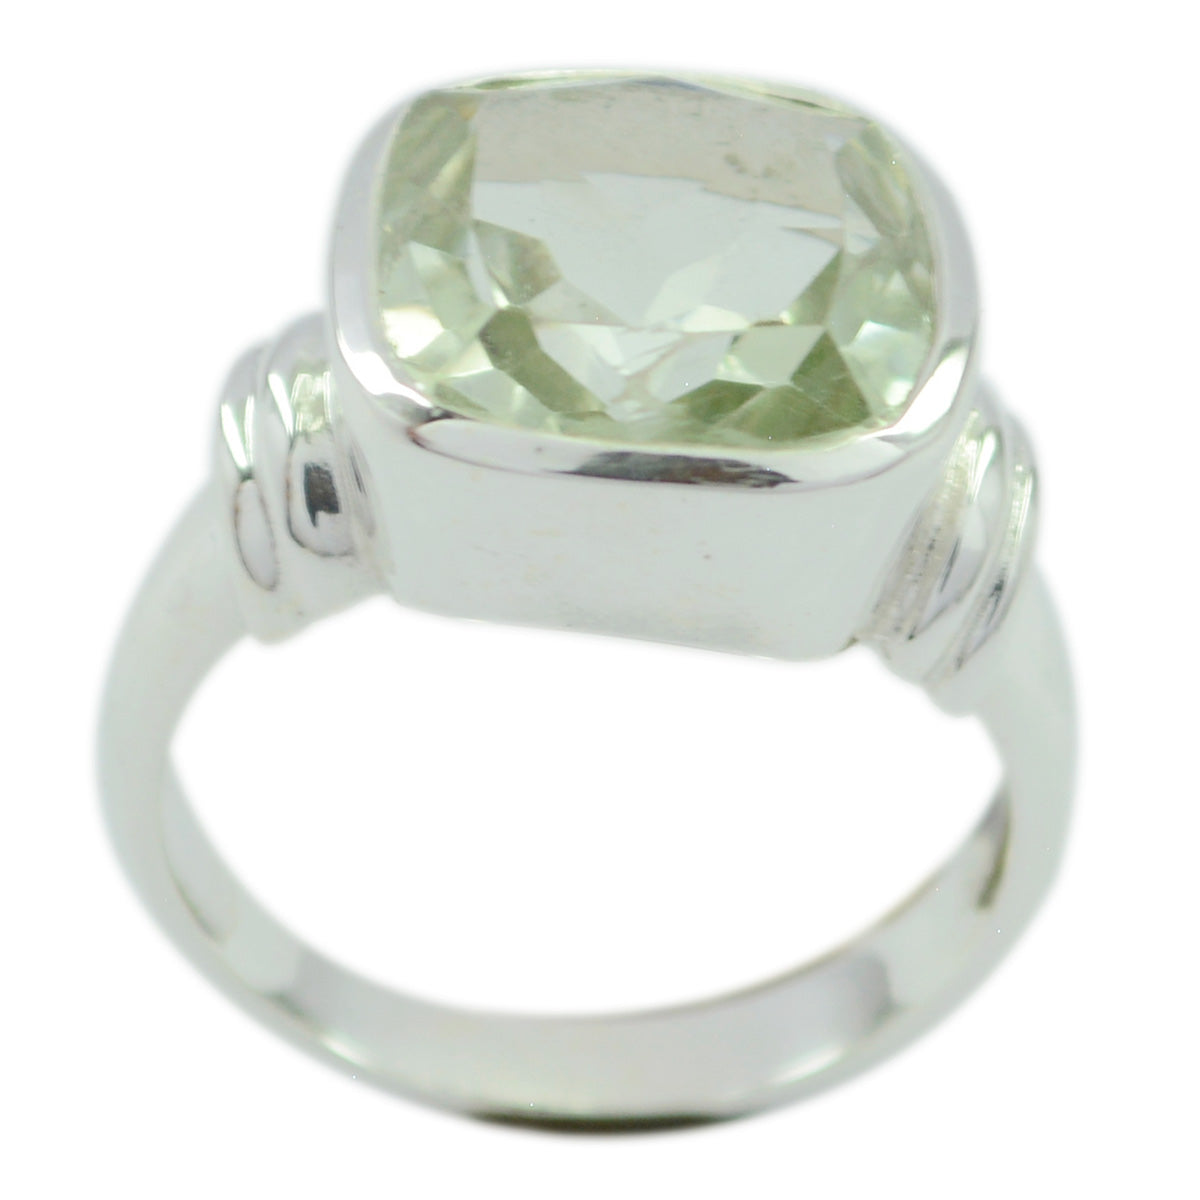 Riyo Reals Gem Green Amethyst Solid Silver Ring Homemade Jewelry